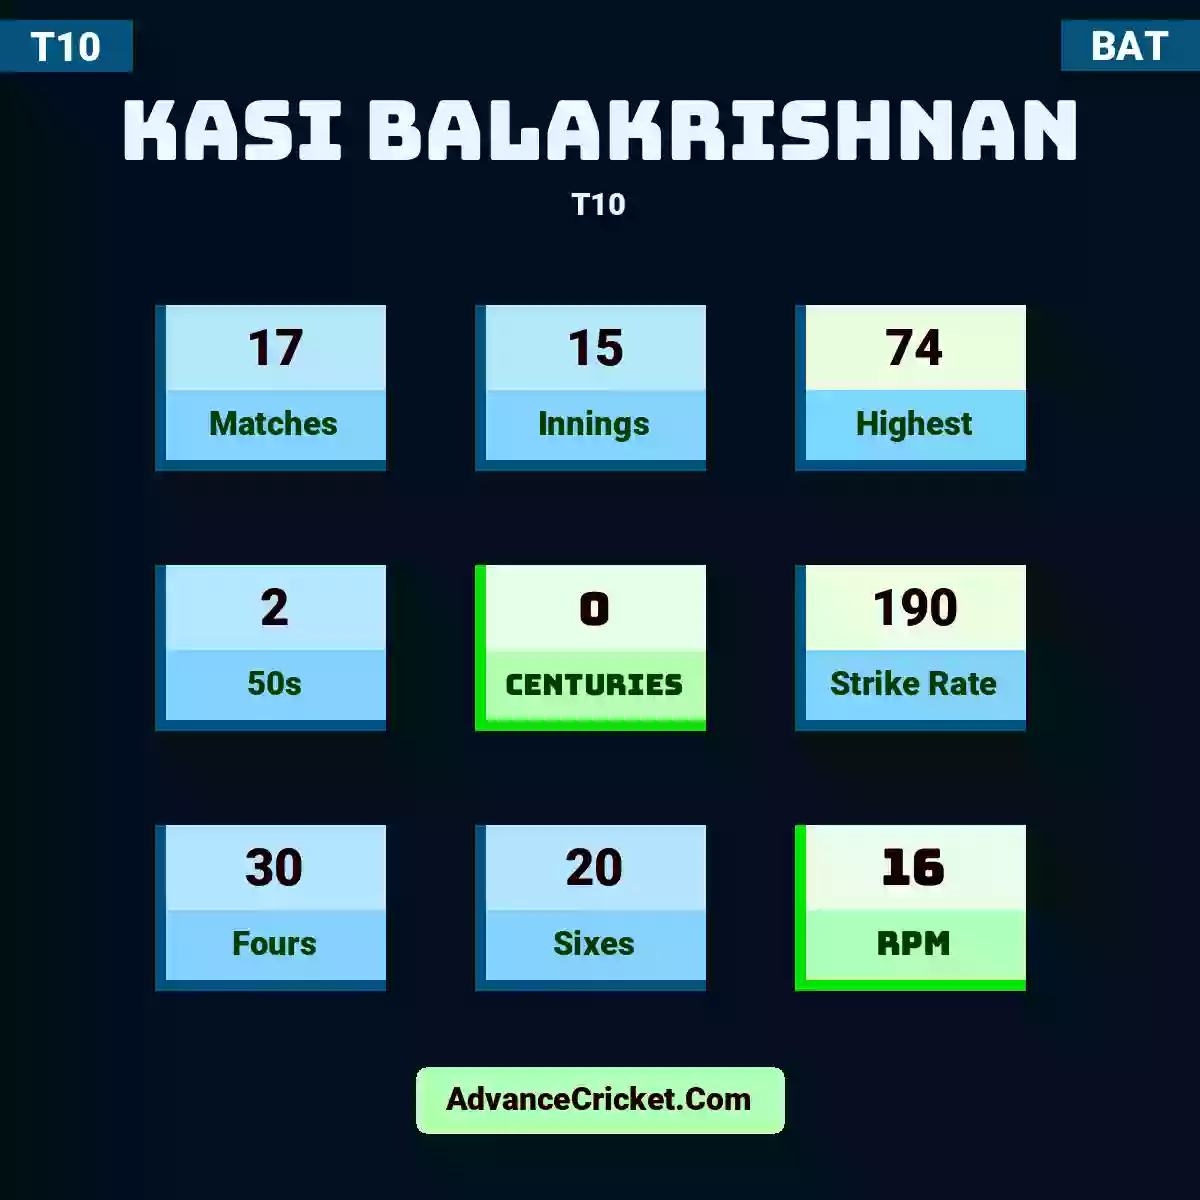 Kasi Balakrishnan T10 , Kasi Balakrishnan played 17 matches, scored 74 runs as highest, 2 half-centuries, and 0 centuries, with a strike rate of 190. K.Balakrishnan hit 30 fours and 20 sixes, with an RPM of 16.